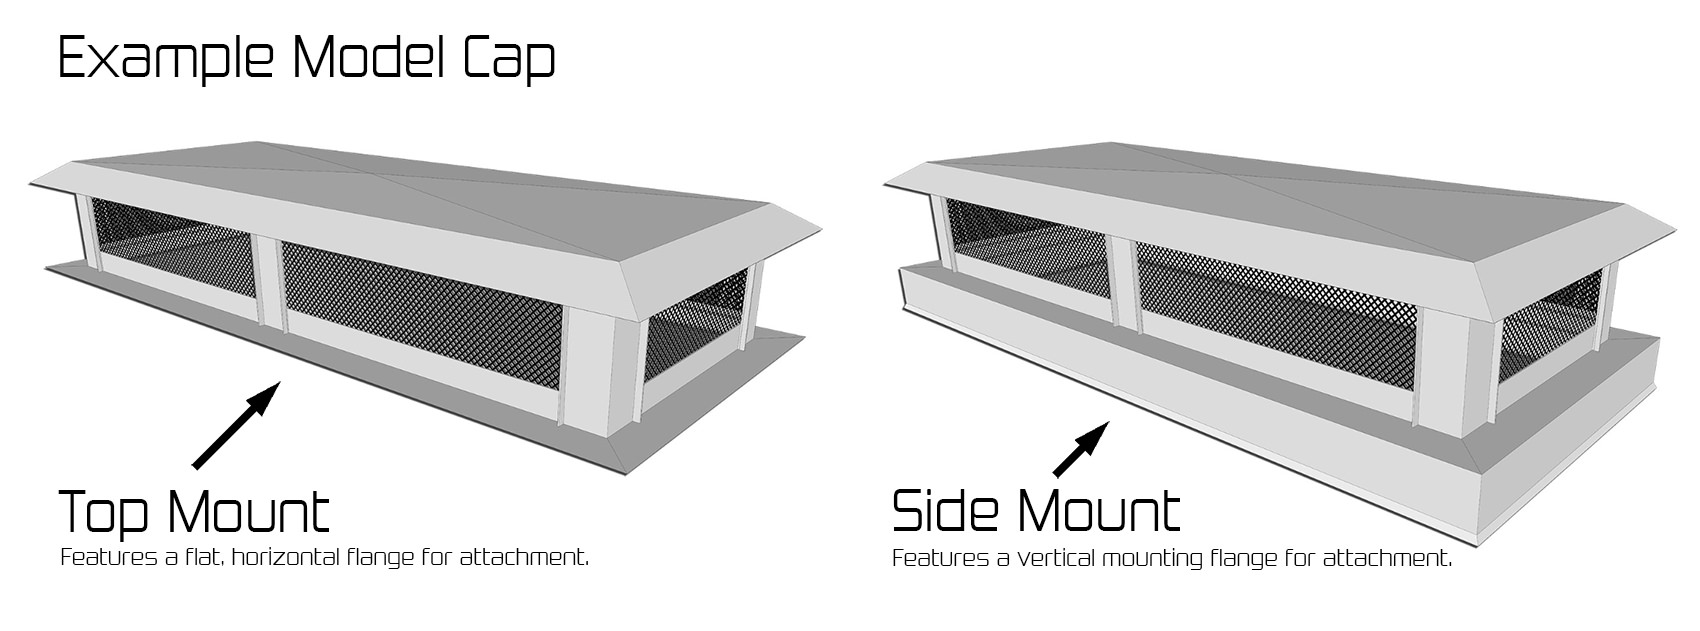 Top Mount vs. Side Mount Chimney Caps